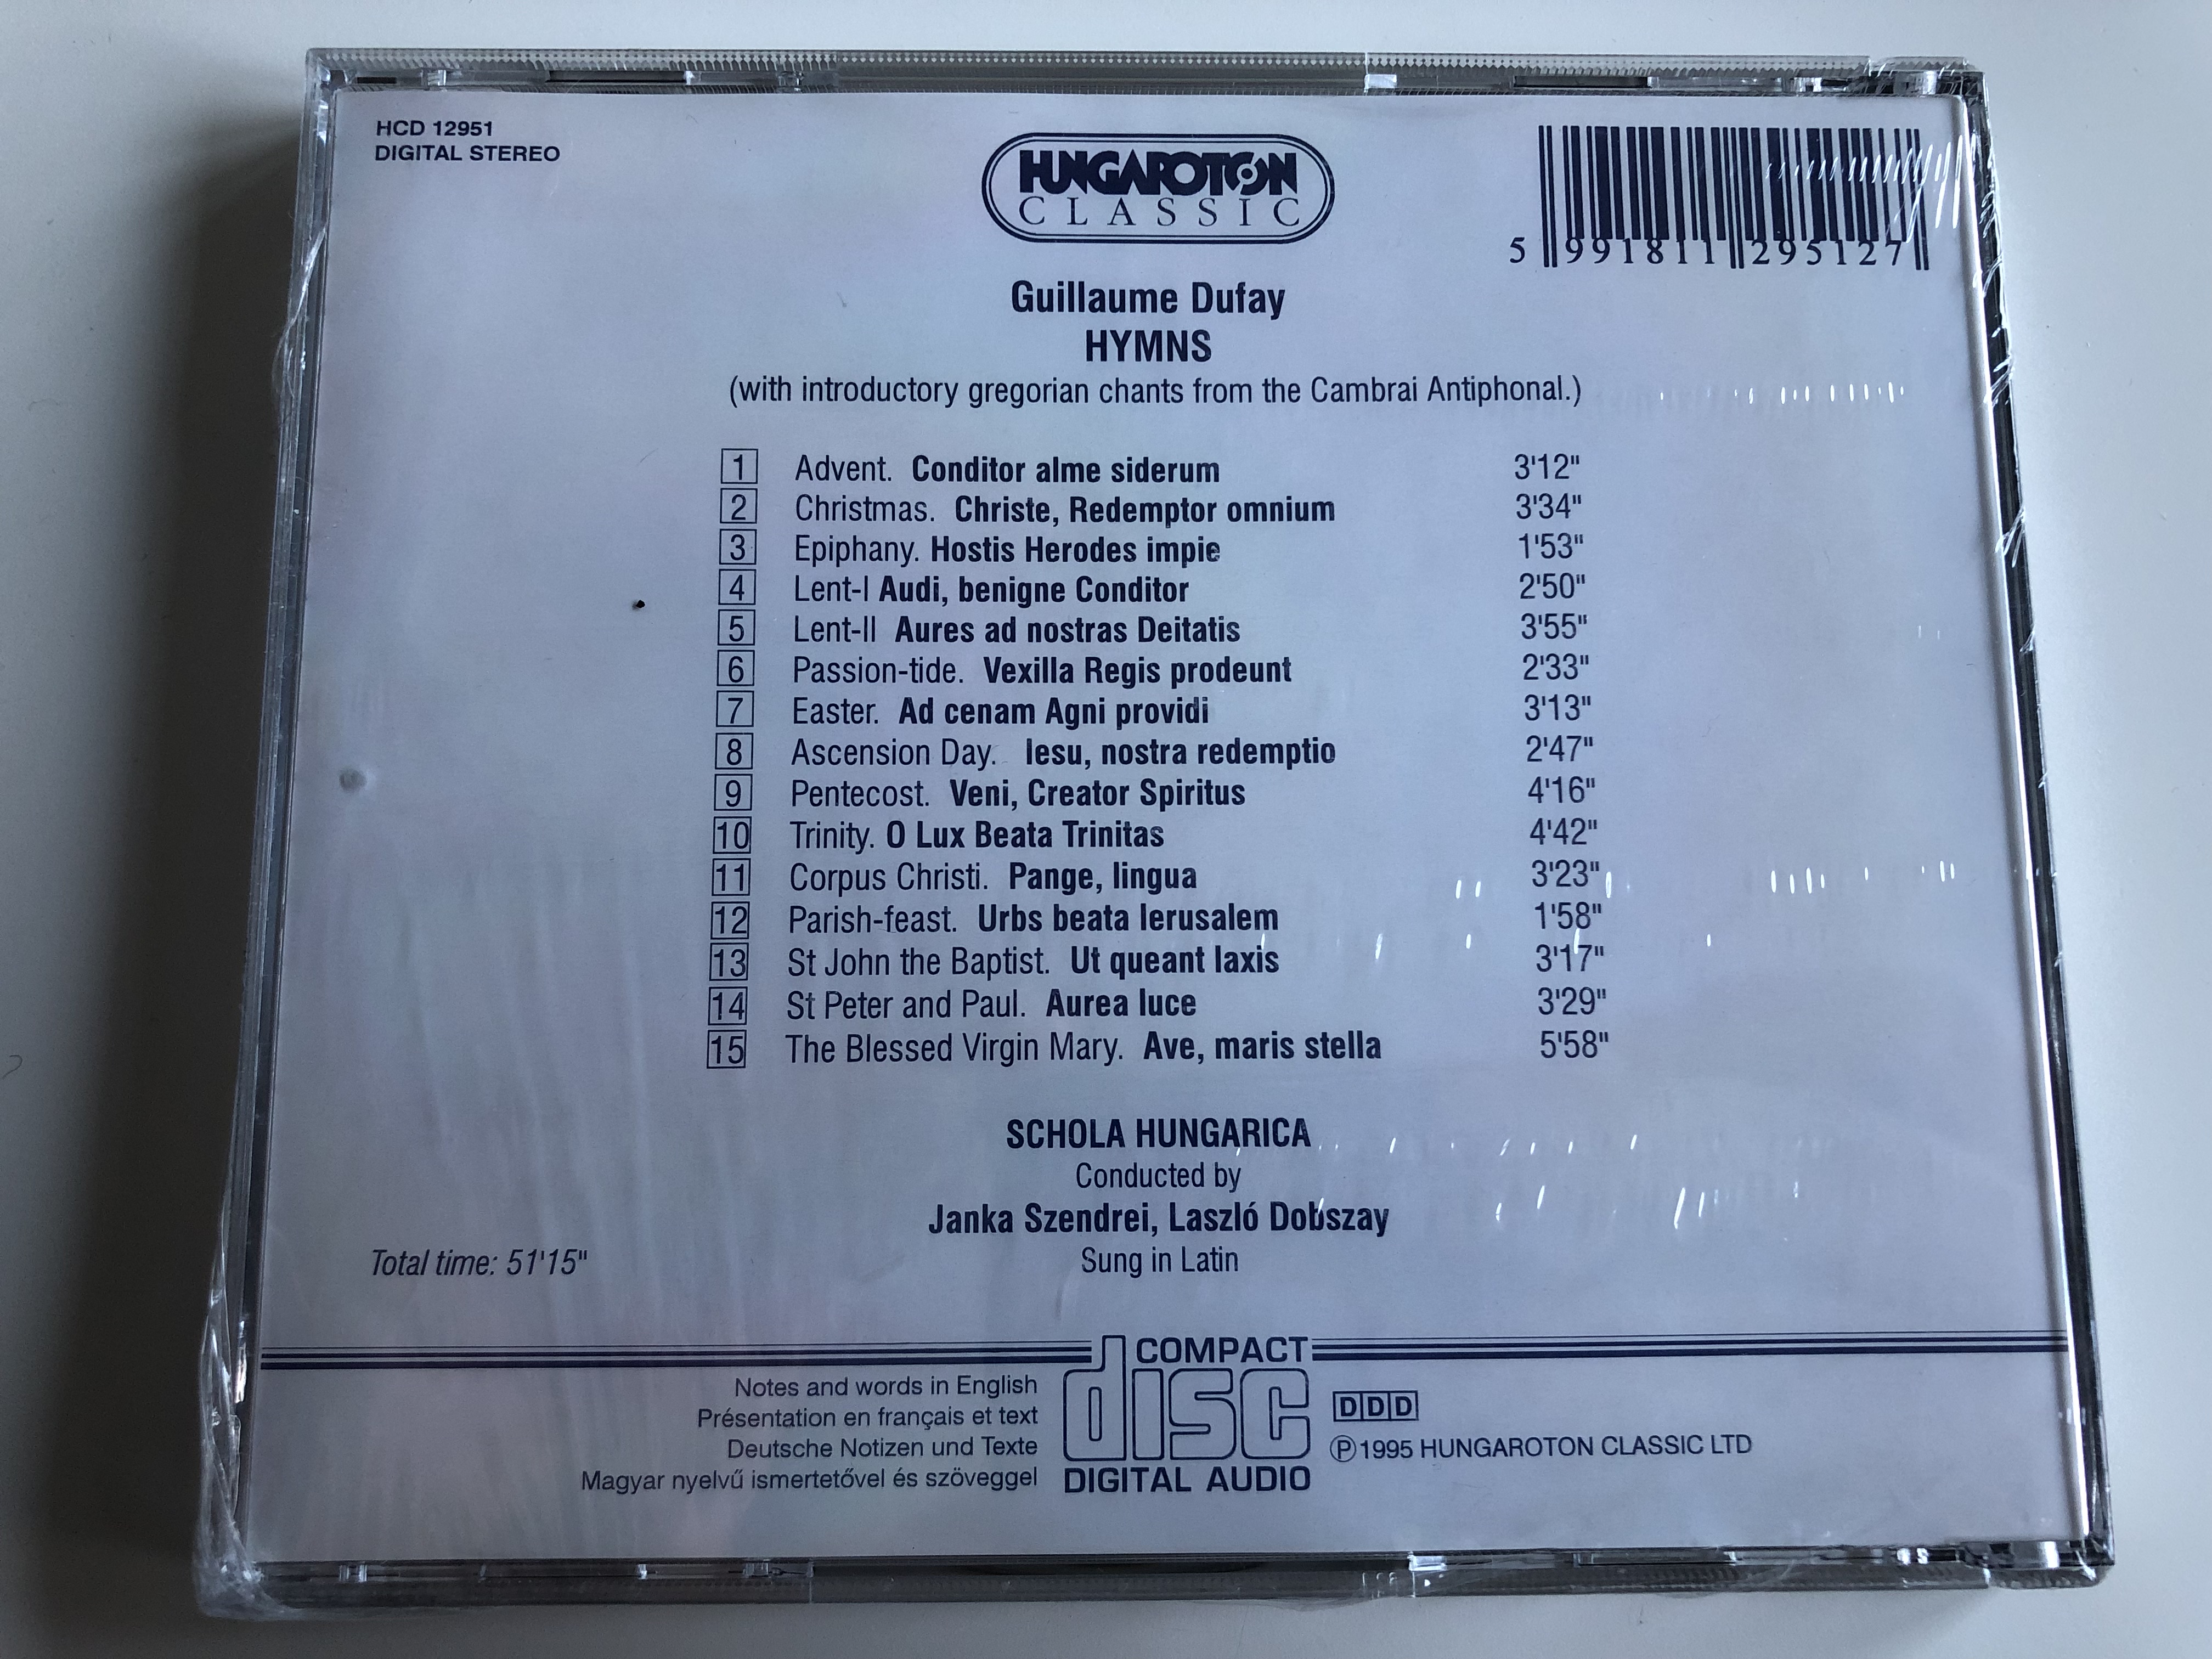 guillaume-dufay-hymns-schola-hungarica-janka-szendrei-hungaroton-classic-audio-cd-1995-stereo-hcd-12951-2-.jpg